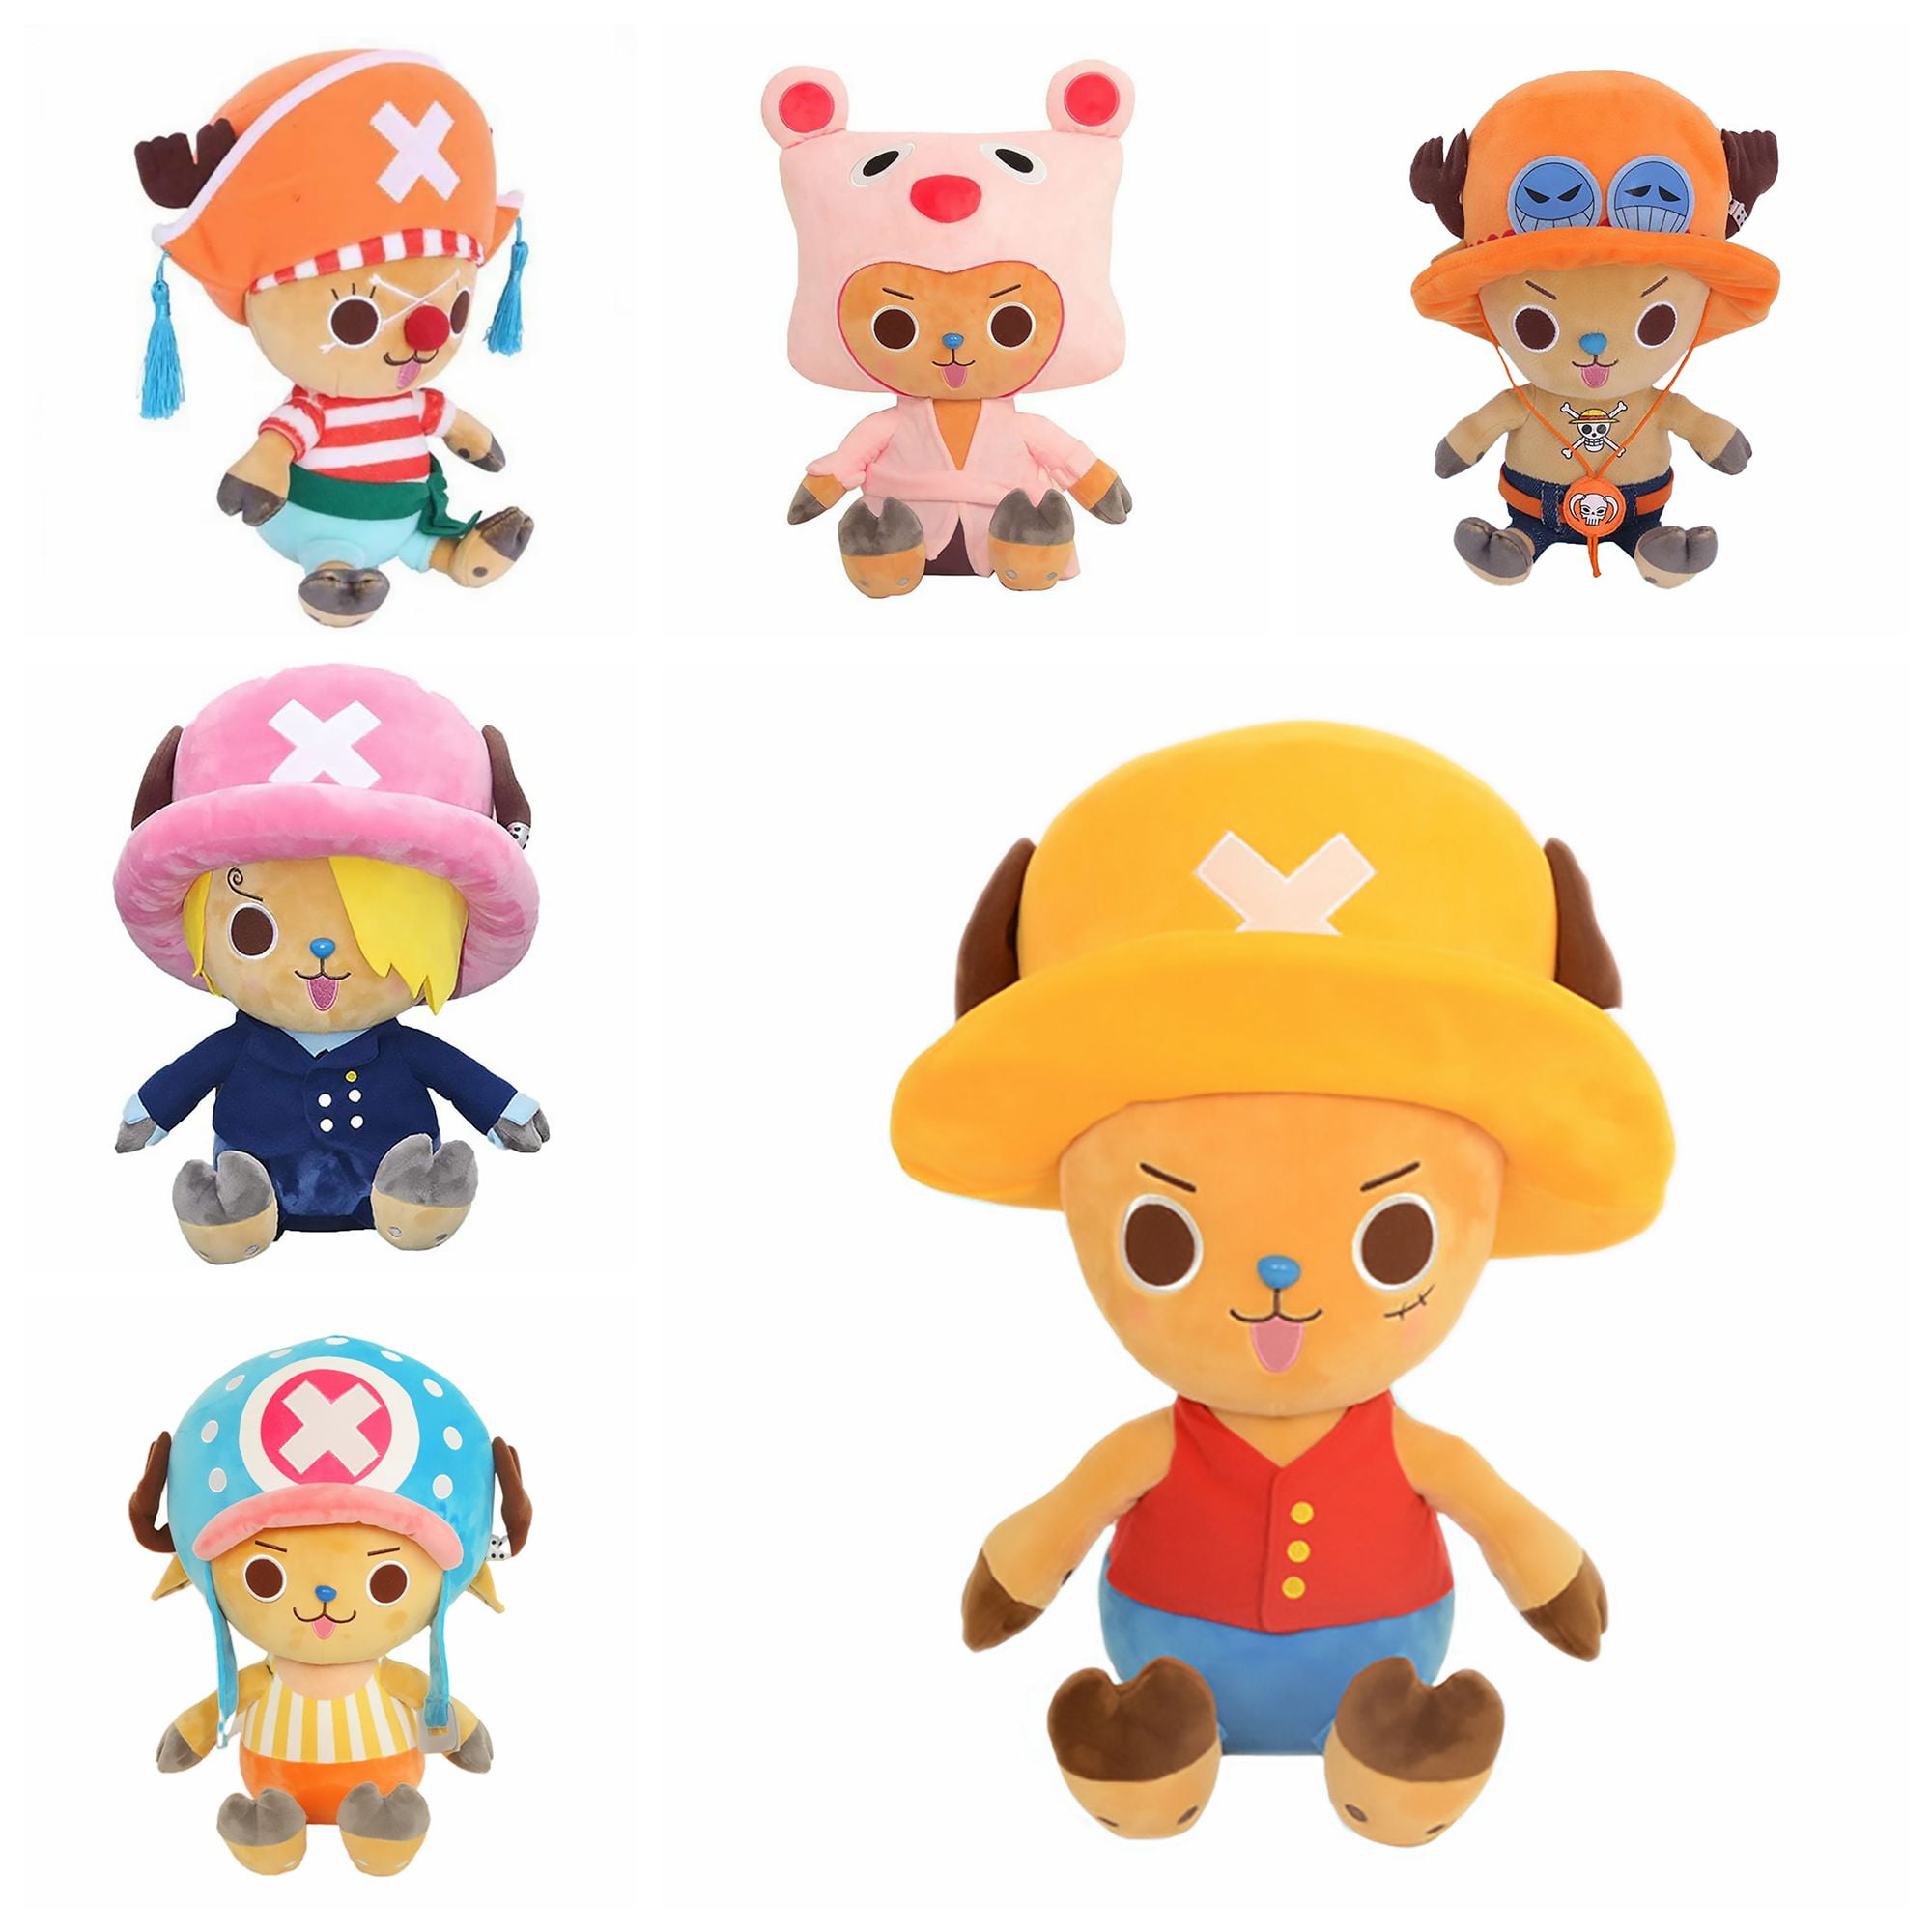 ONE PIECE Sanji Chopper Plush Toy Doll Pink Stuffed Pillow Kids Favor Gift Anime 